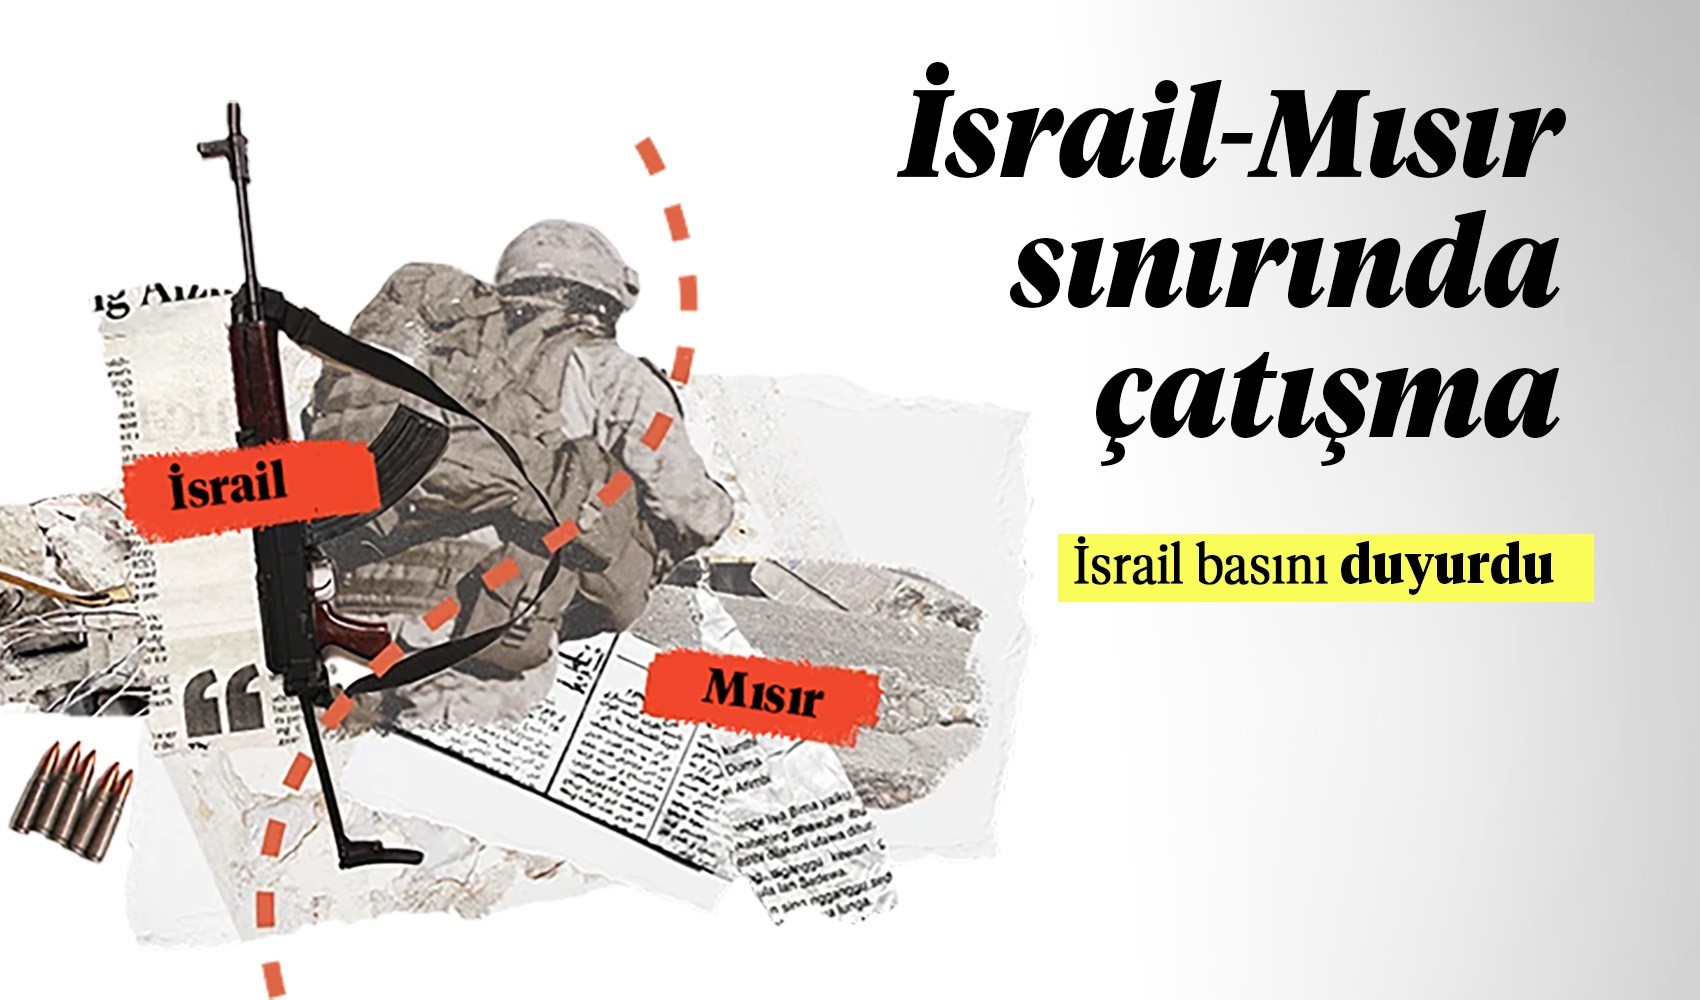 Mısır- İsrail sınırında çatışma! Bölgede gerilim arttı...